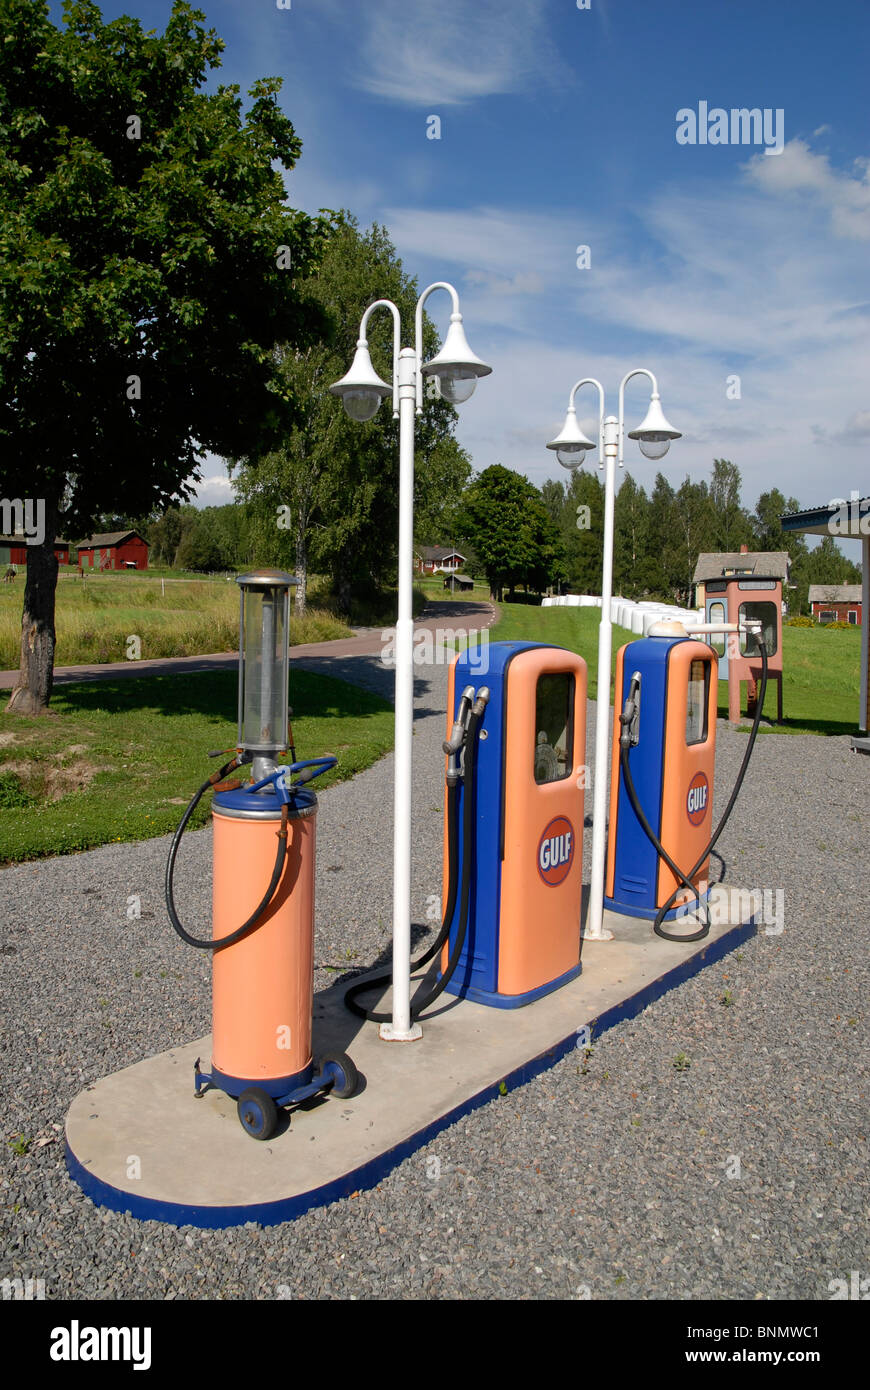 bike pump petrol station